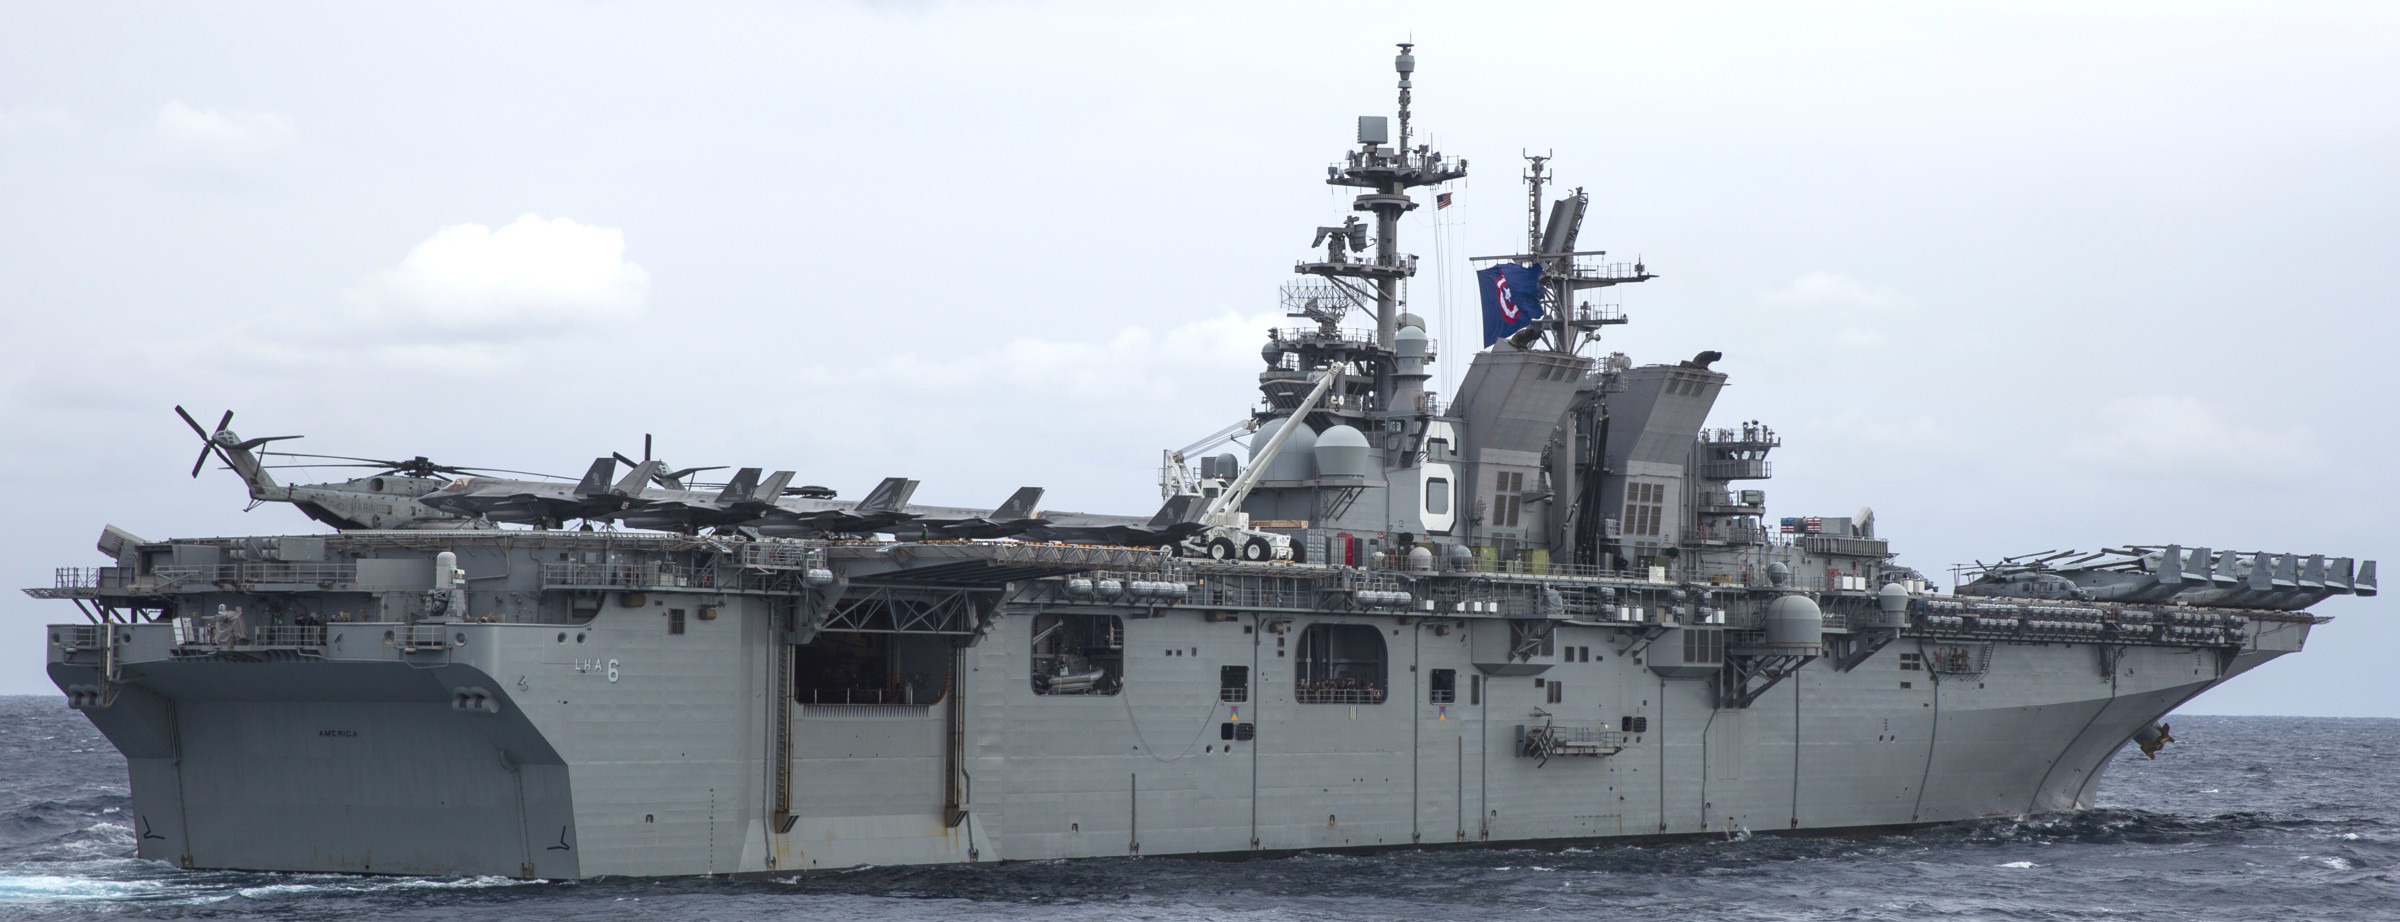 lha-6 uss america amphibious assault ship landing us navy marines vmm-265 154